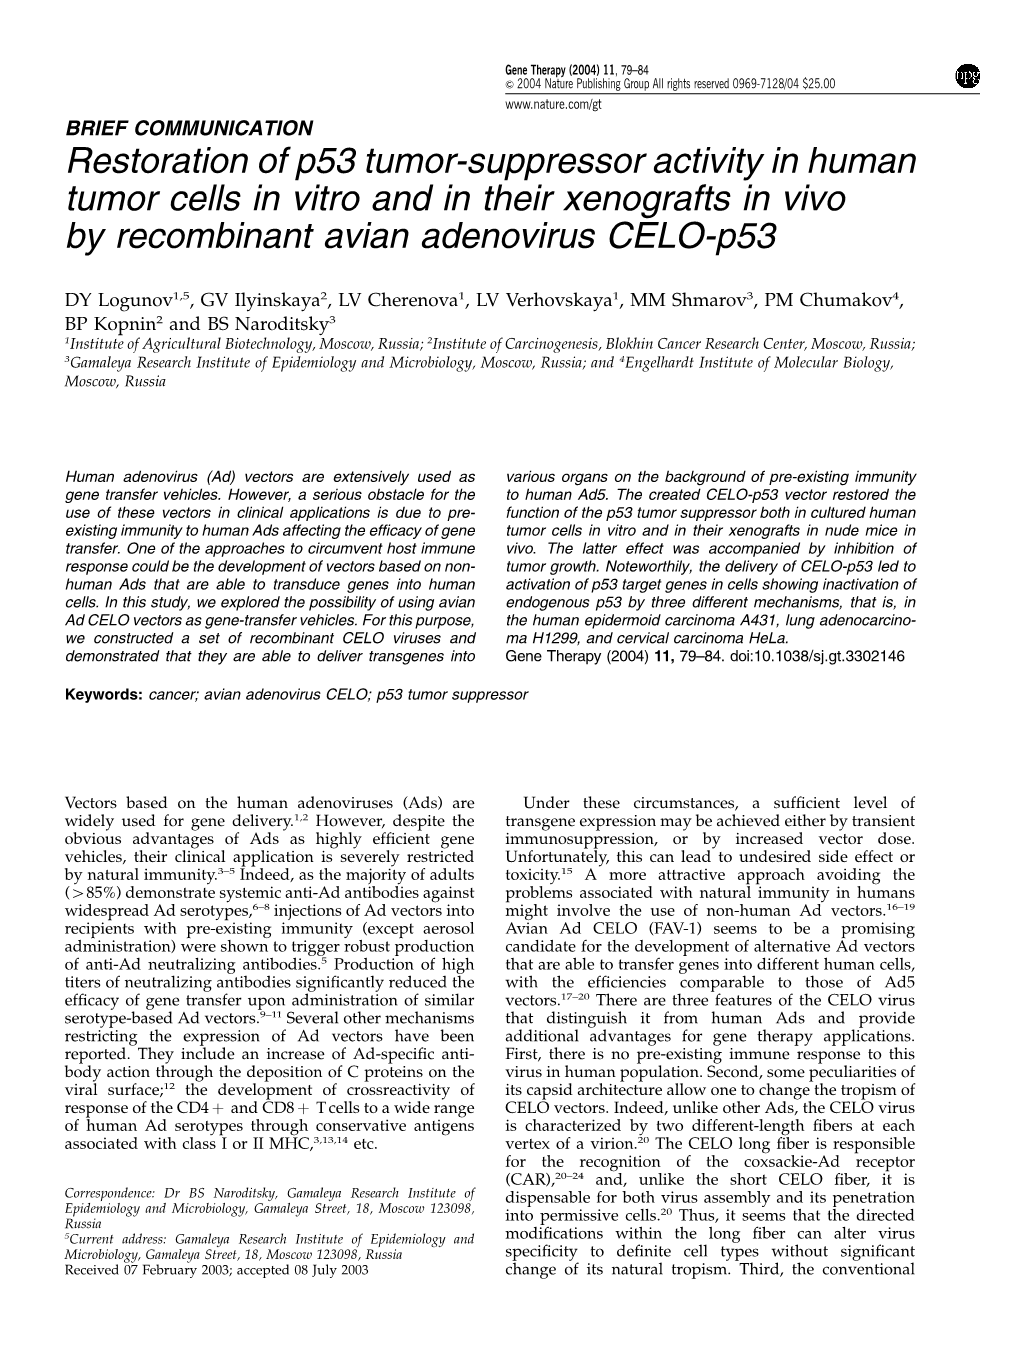 Restoration of P53 Tumor-Suppressor Activity in Human Tumor Cells in Vitro and in Their Xenografts in Vivo by Recombinant Avian Adenovirus CELO-P53